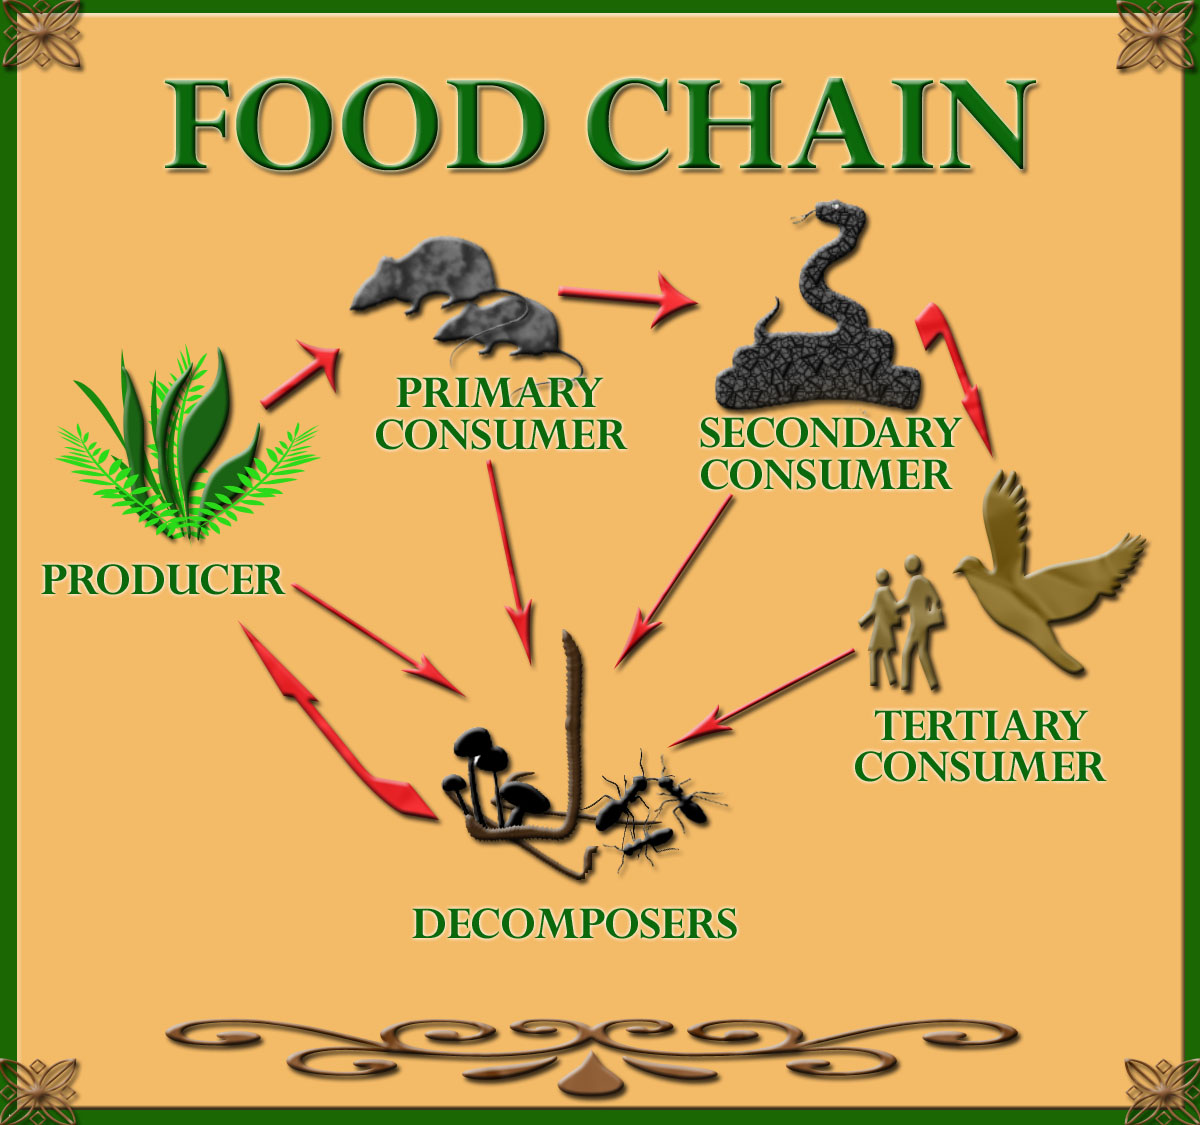 Consumer Food Chain